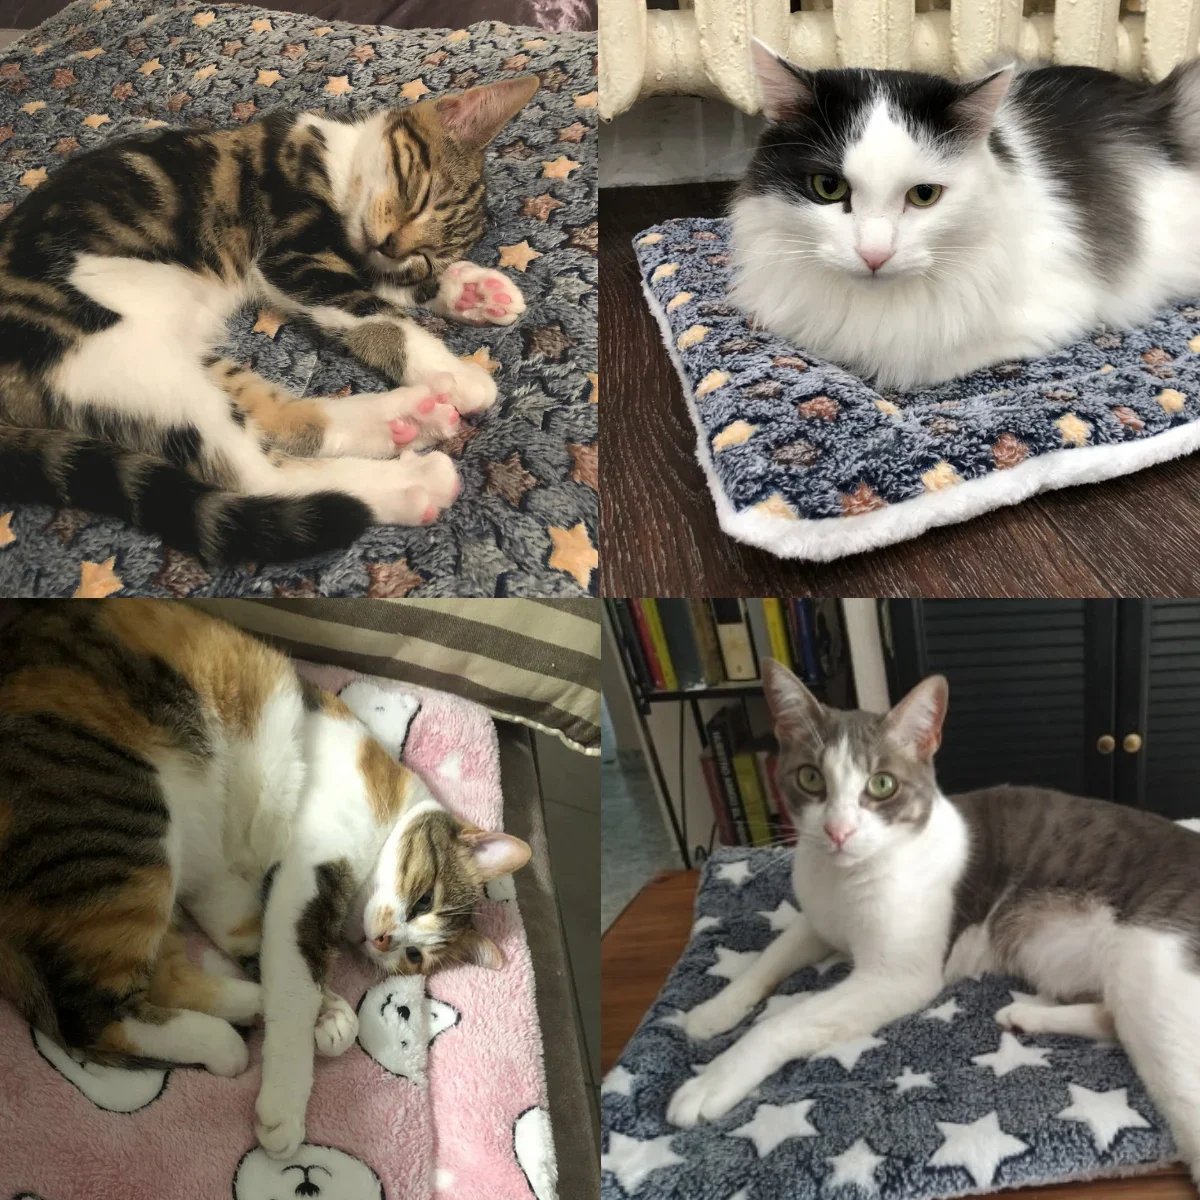 🔥HOT SALE NOW 49% OFF🔥 Cat Blanket